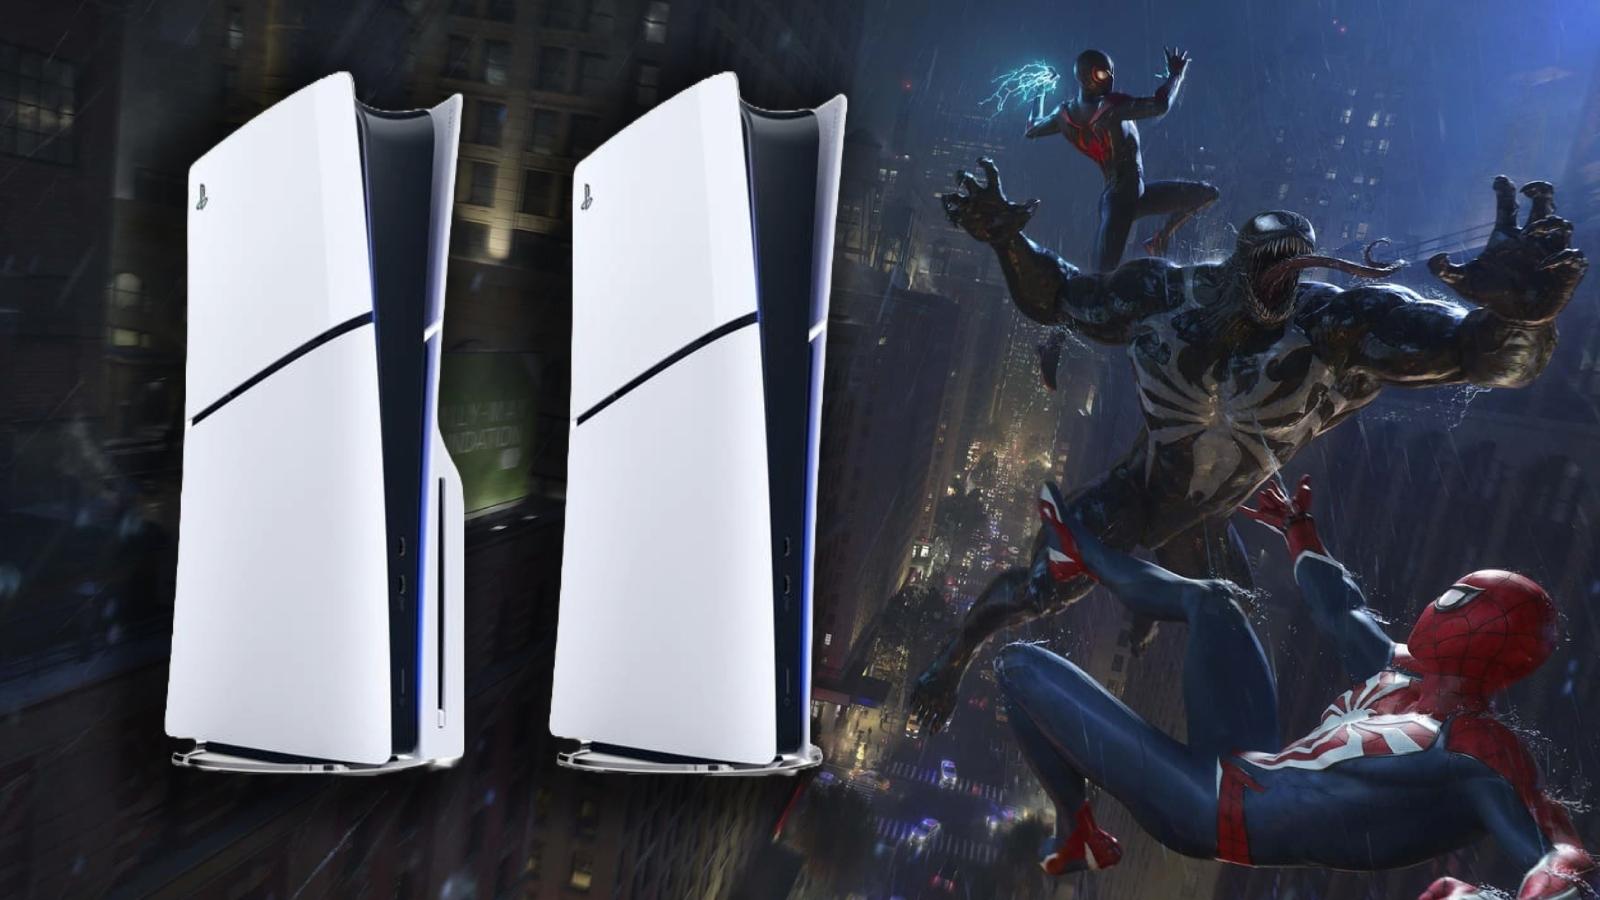 PS5 Slim console next to dark image of Spider-Man 2